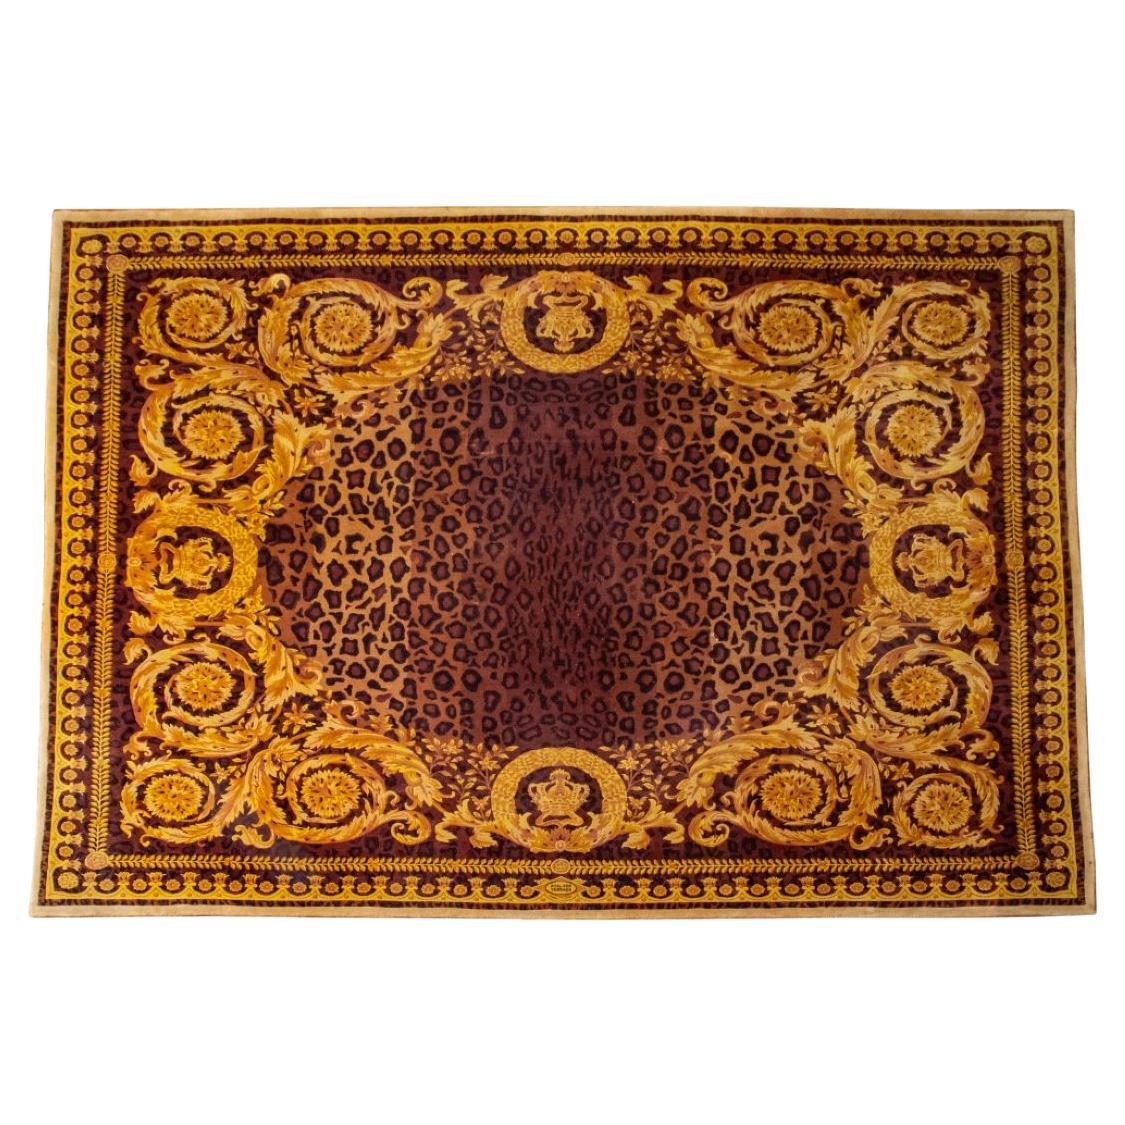 Atelier Versace "Wild Barocco" Carpet, 9'9" x 8'2"